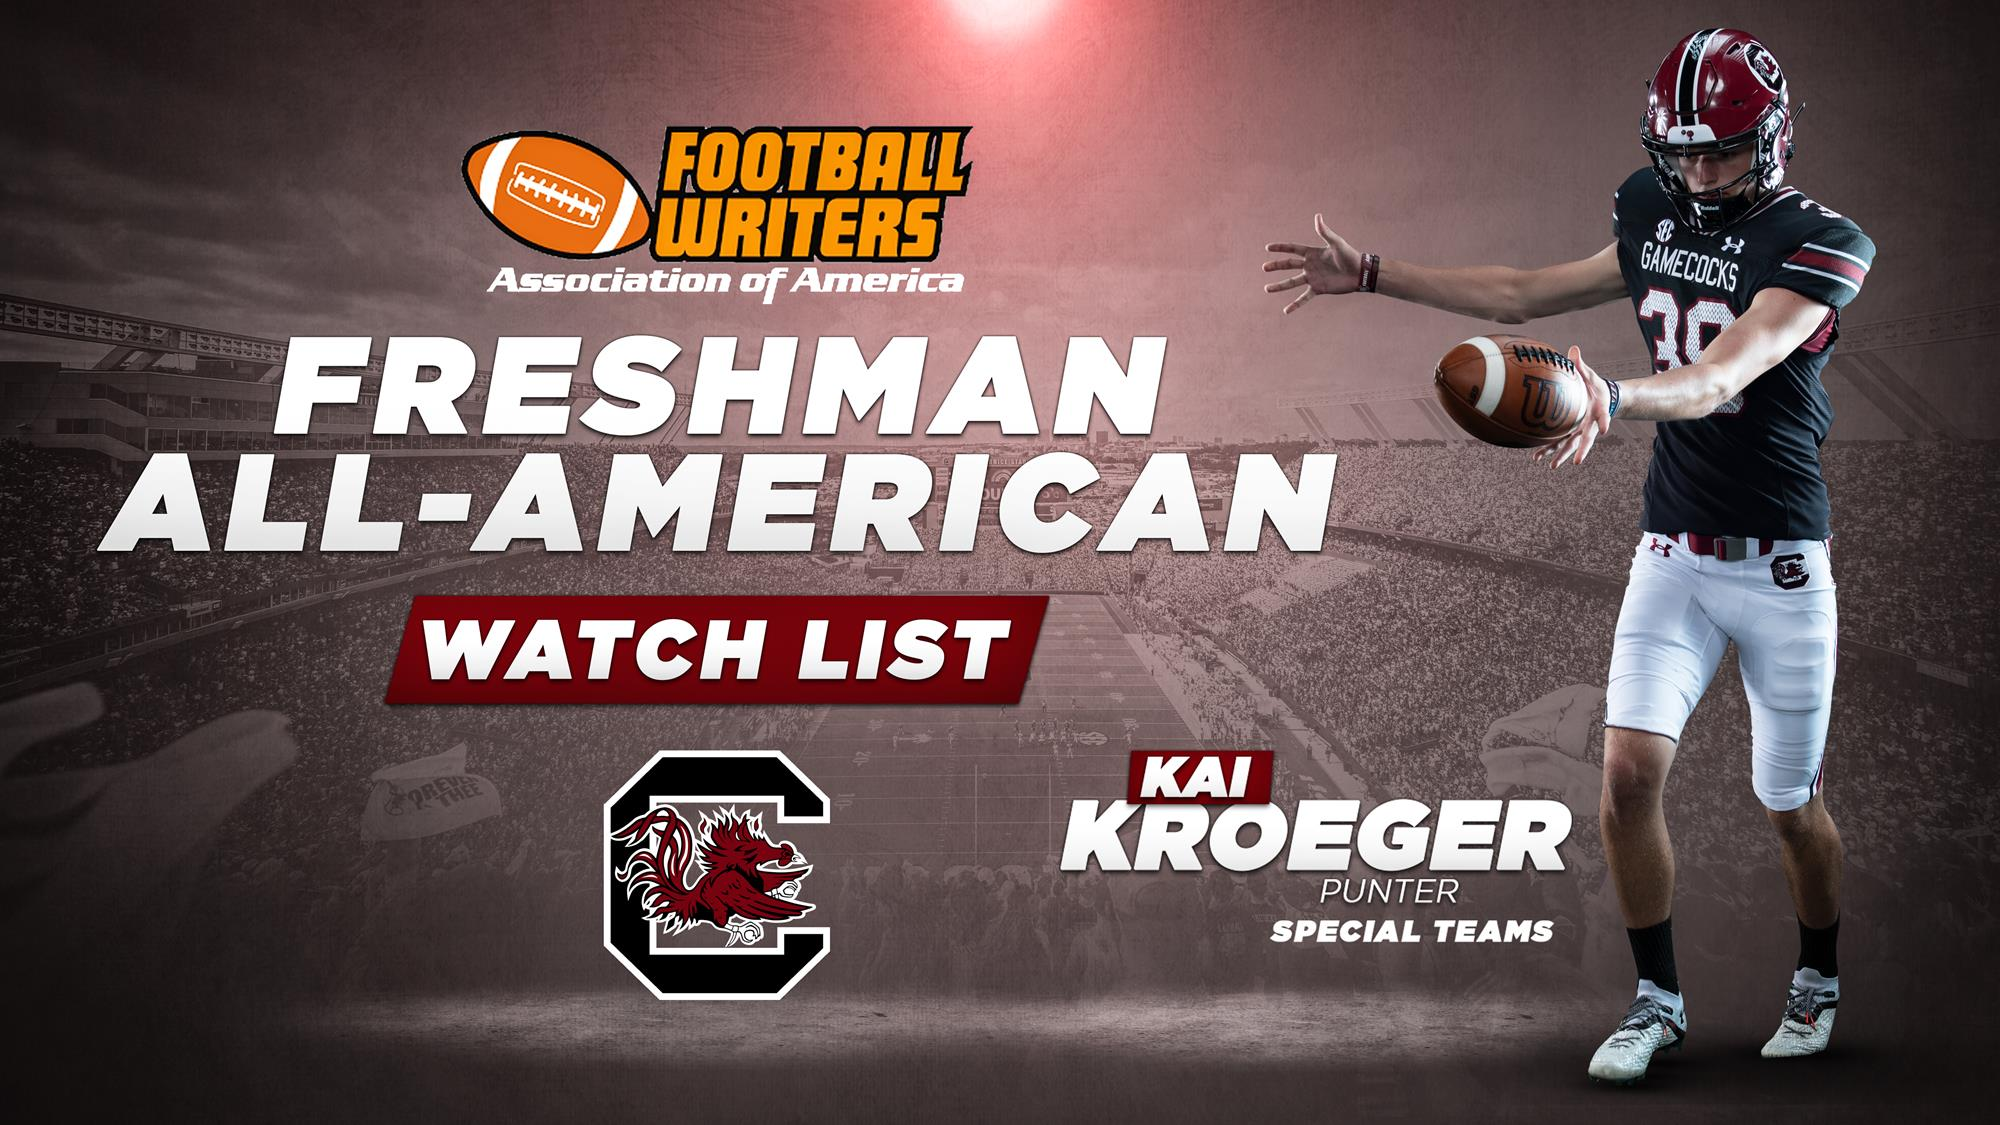 Kai Kroeger Named to Freshman All-American Watch List